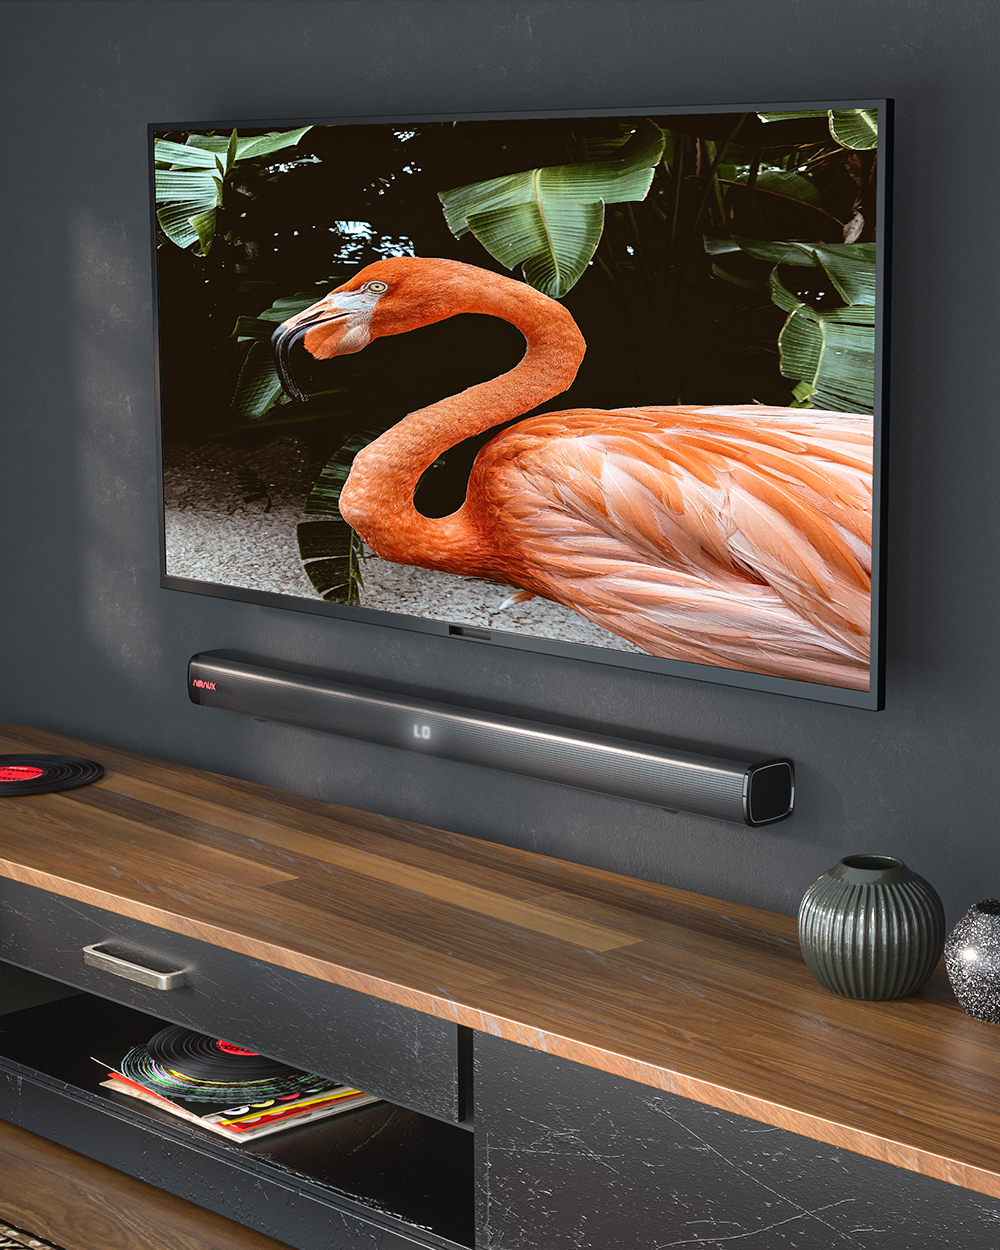 BlitzWolf® AirAux AA-SAR1 60W Bluetooth V5.0 Soundbar בר טלוויזיה טלוויזיה בס חזק DSP סטריאו HDMI אופטי AUX רמקול קולנוע ביתי